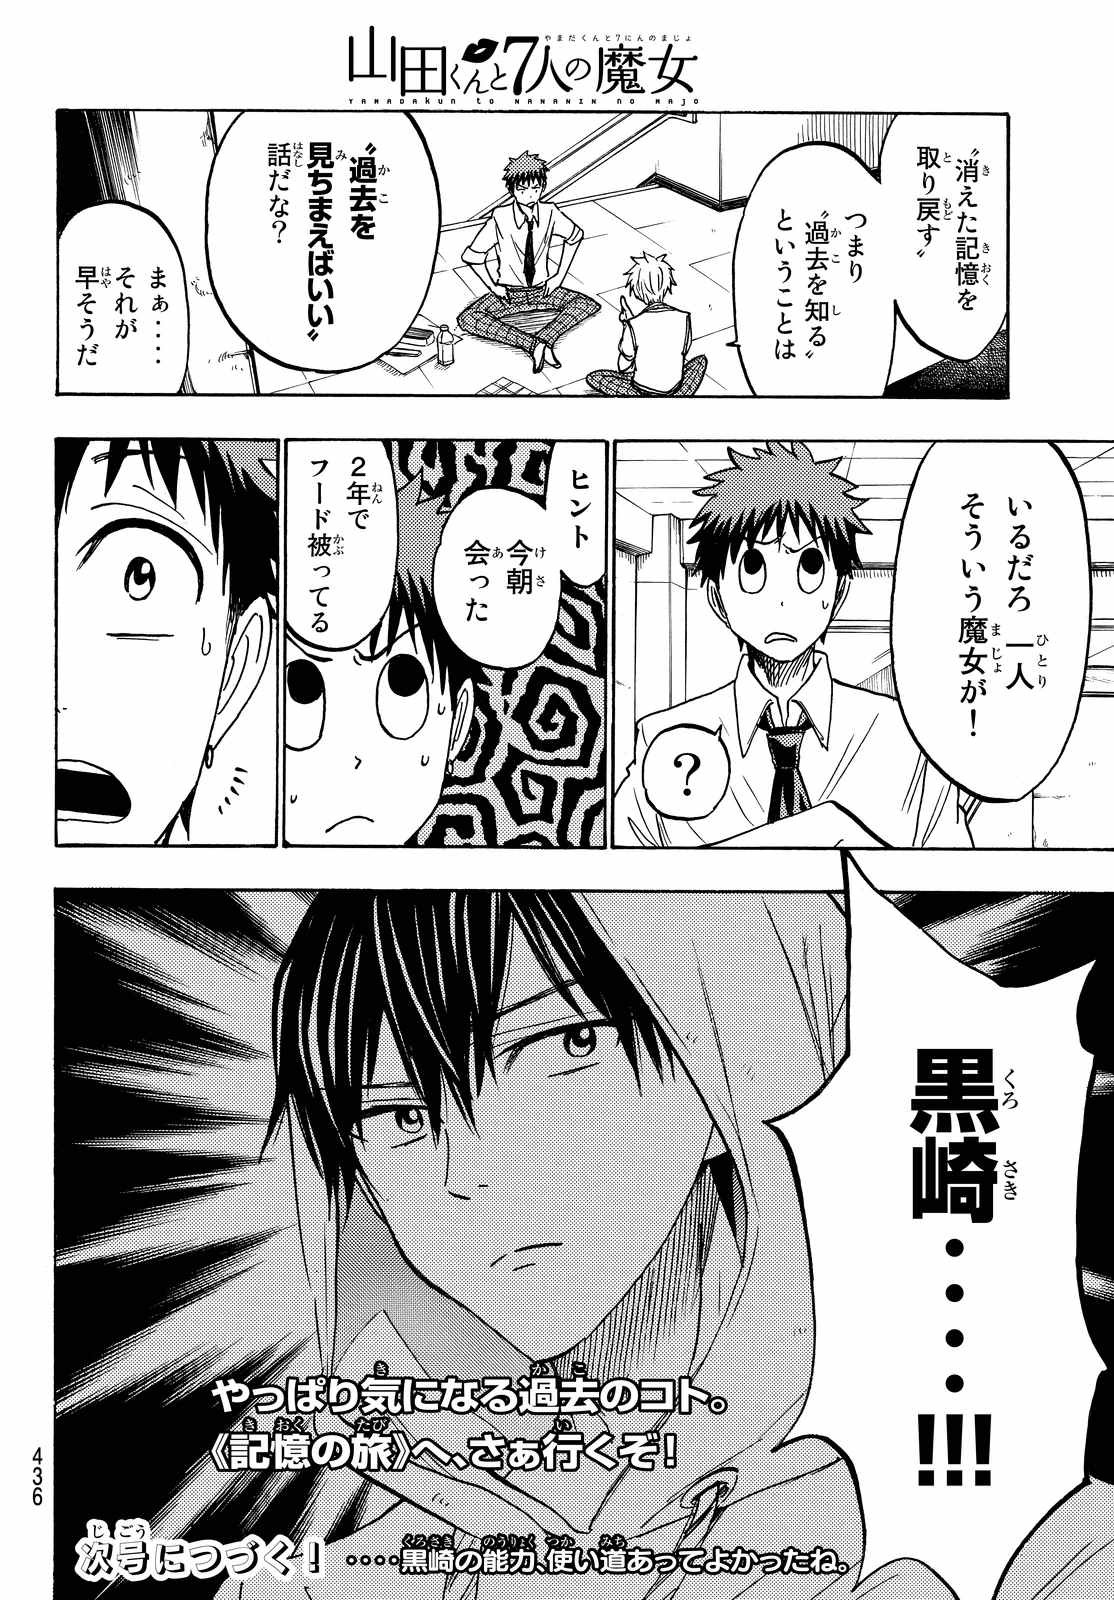 Yamada-kun to 7-nin no Majo - Chapter 210 - Page 20